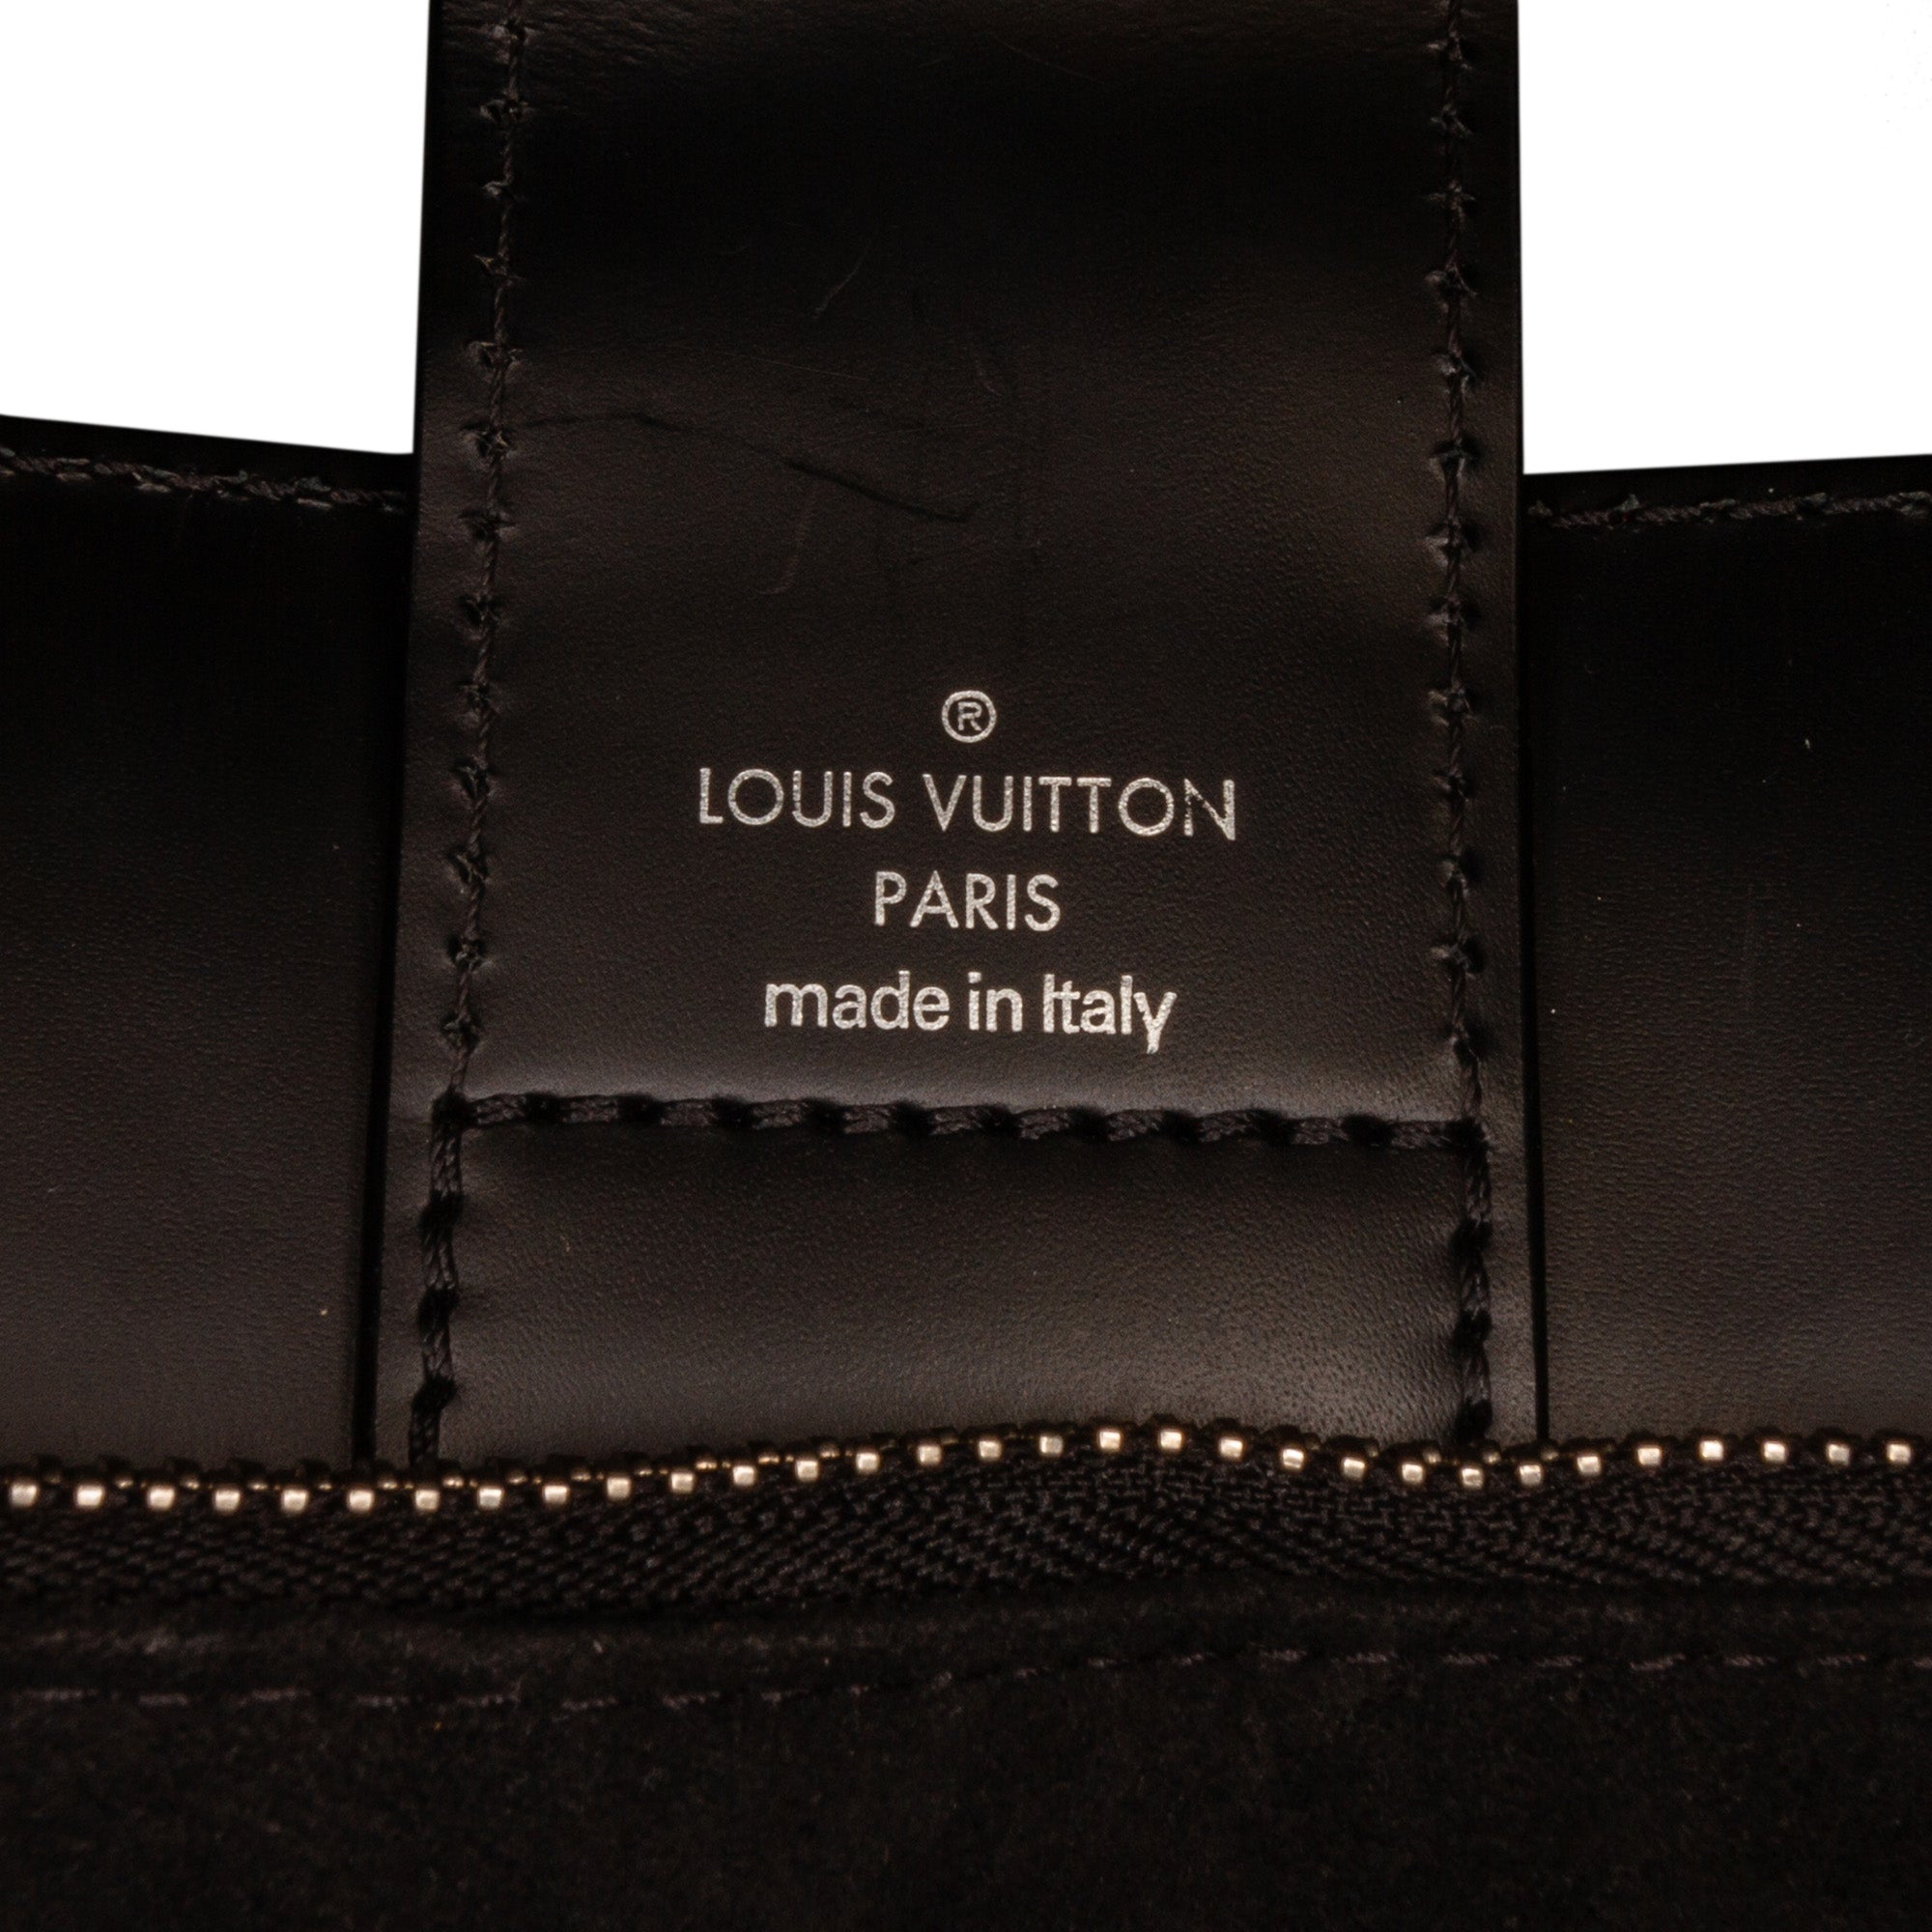 Black Louis Vuitton Epi Kleber MM Satchel, AmaflightschoolShops Revival